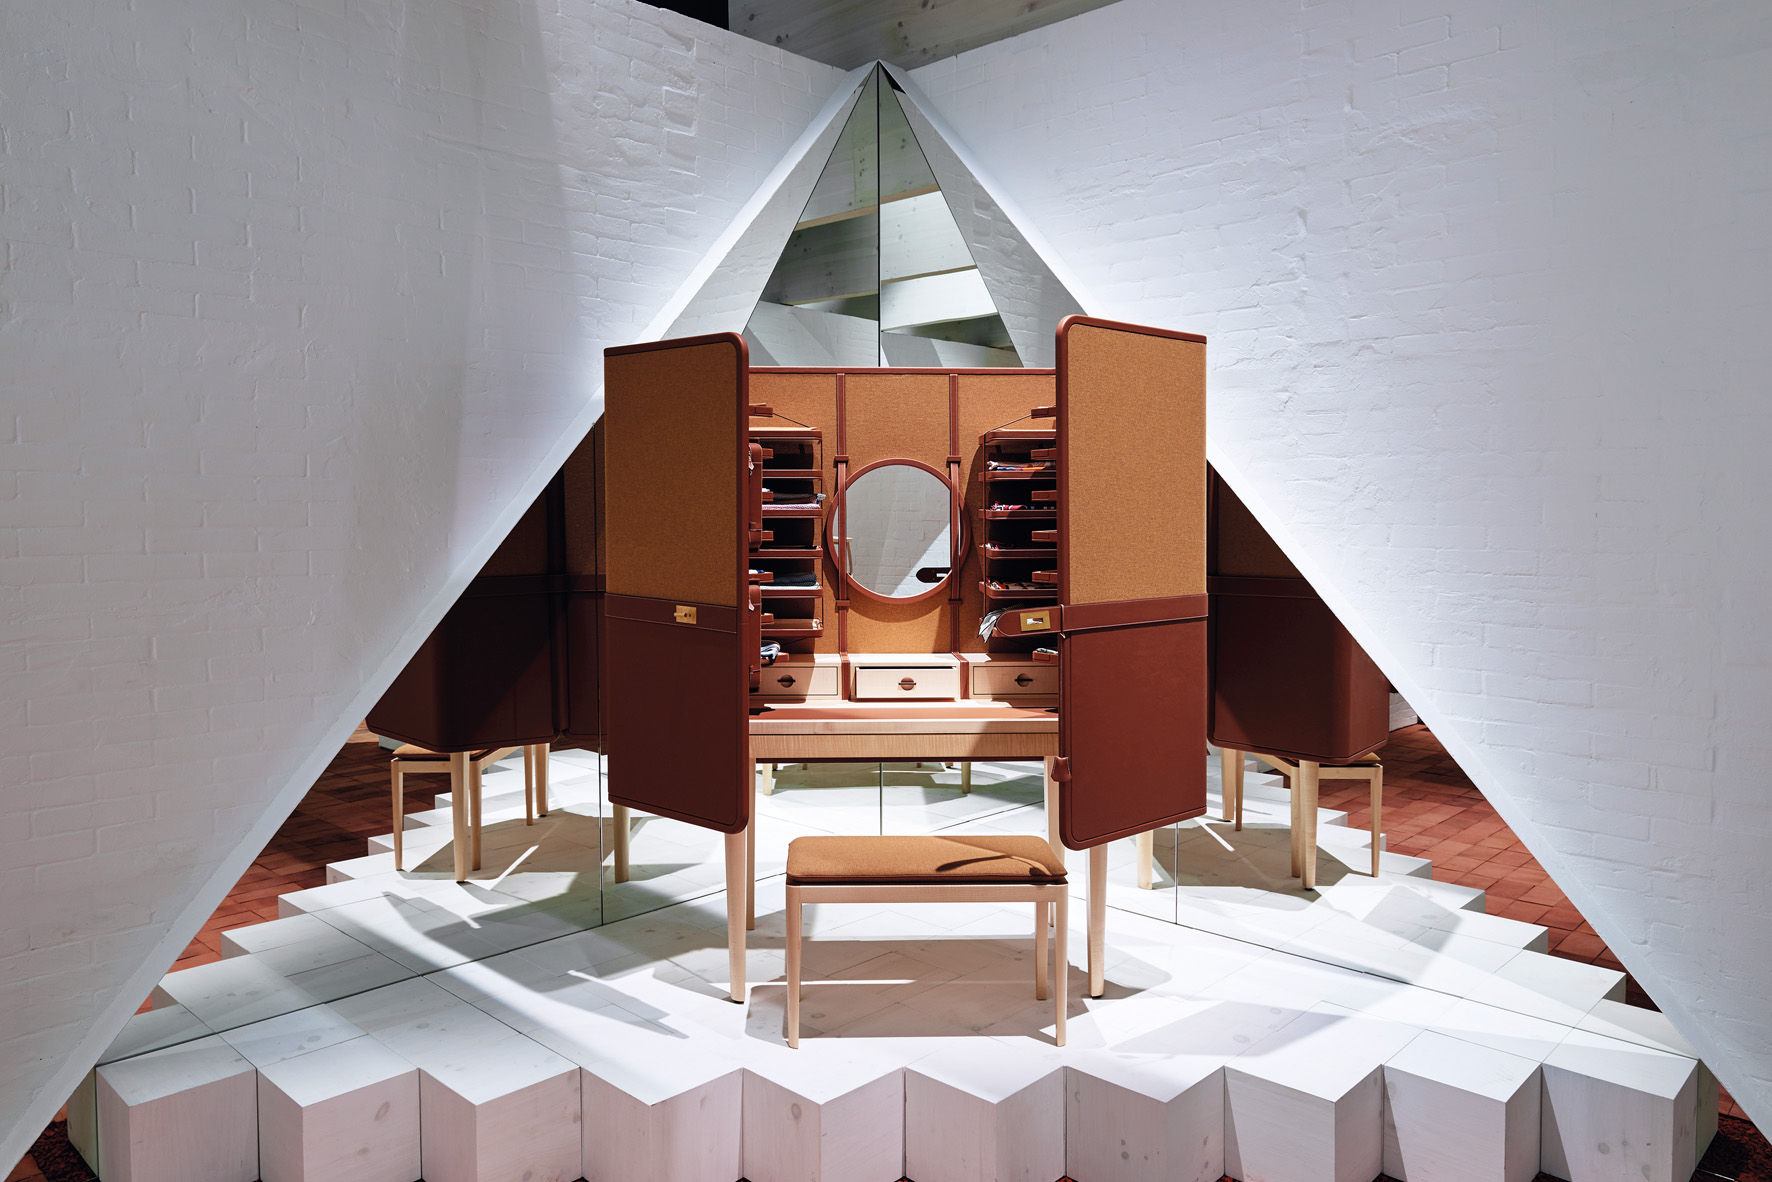 Hermès’ Through the Walls exhibition showcases the brand’s universe